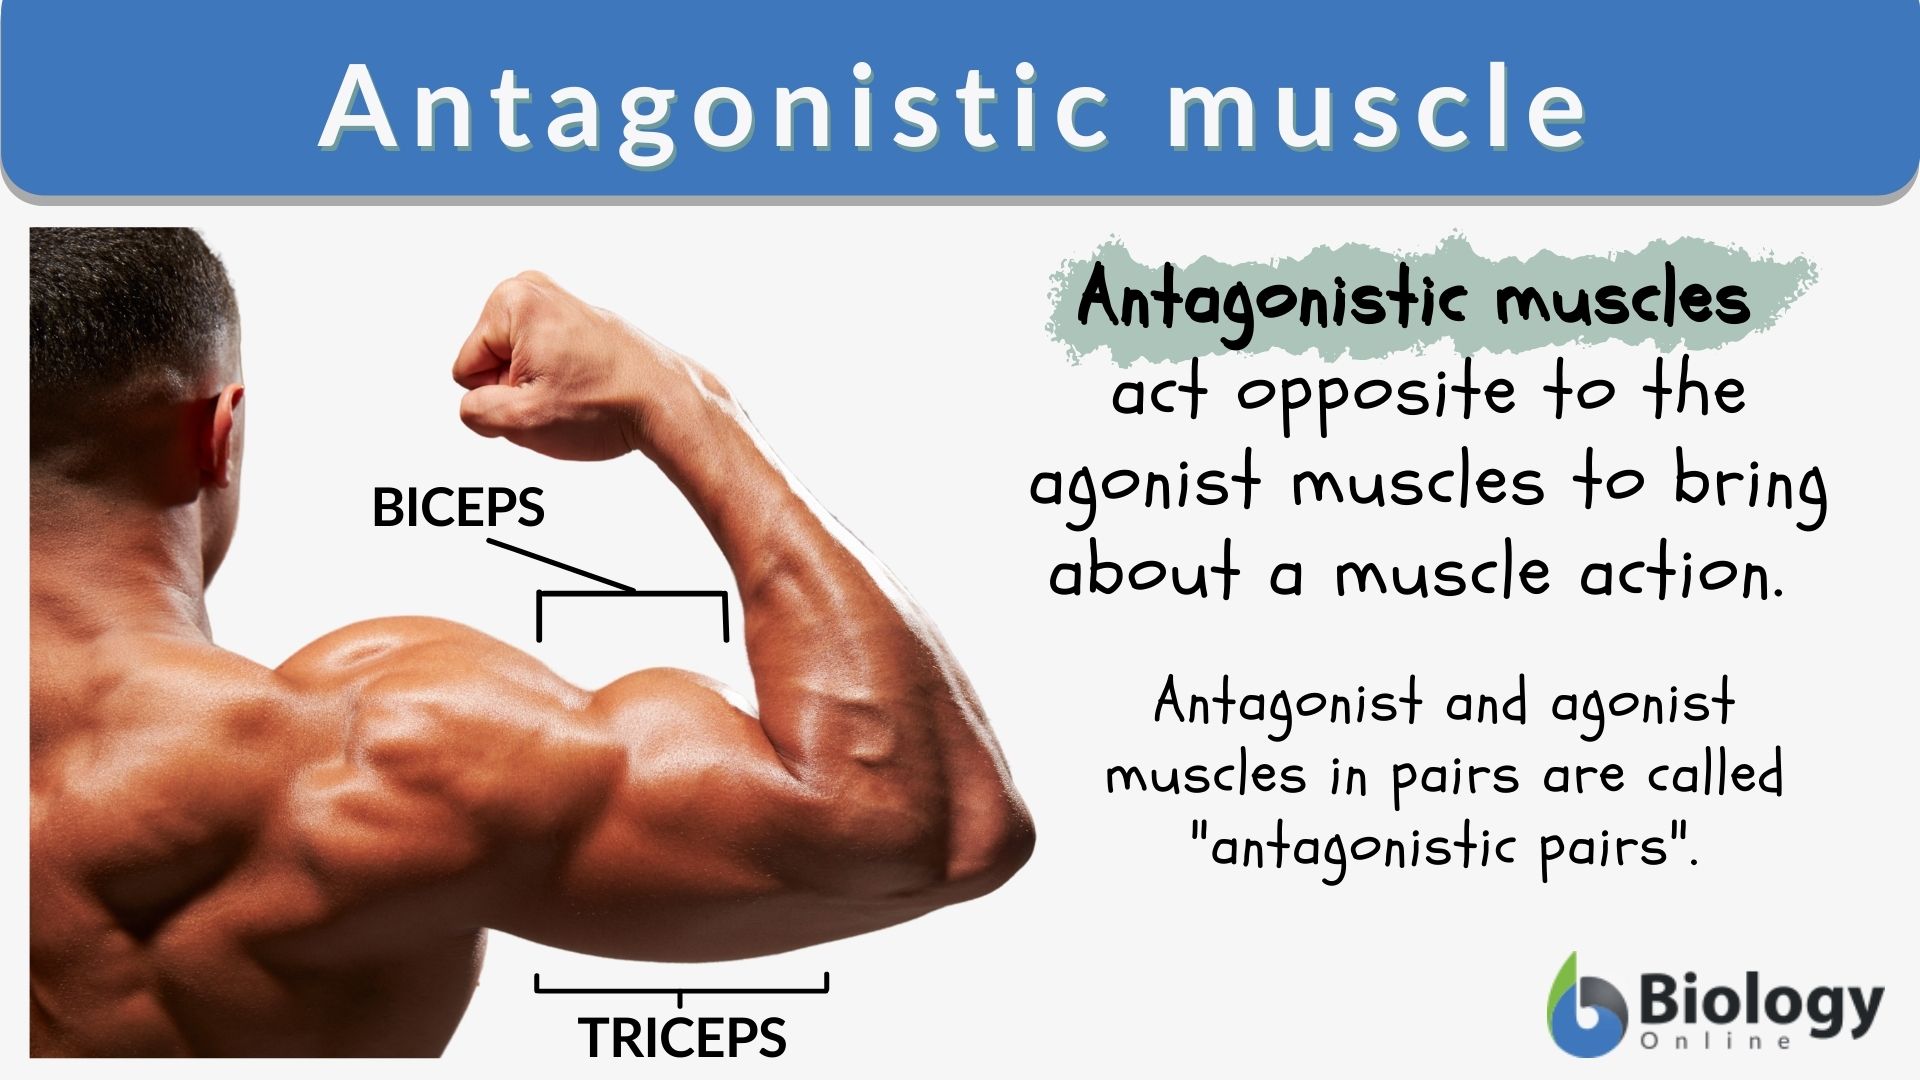 https://www.biologyonline.com/wp-content/uploads/2019/10/antagonistic-muscle-definition.jpg